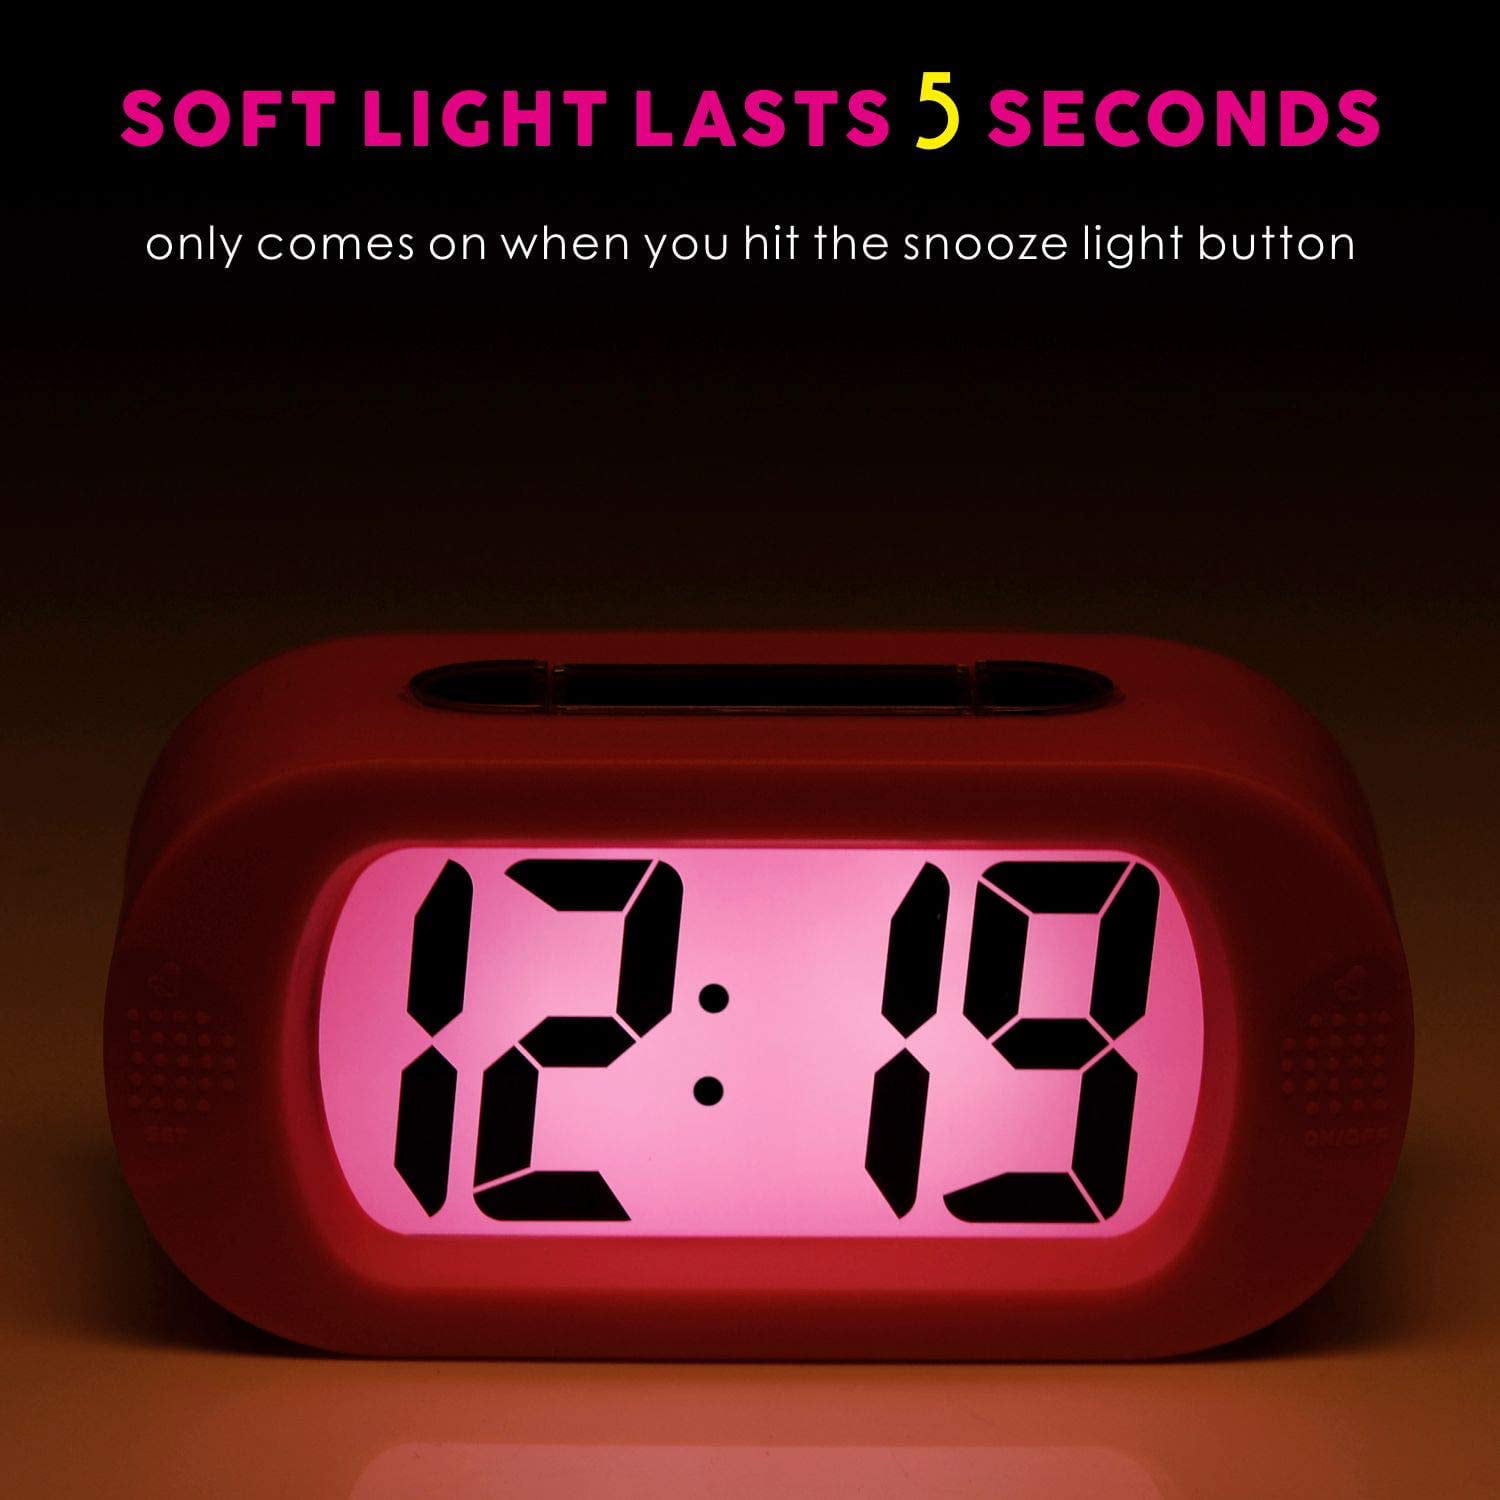 Digital LCD Travel Alarm Clock with Snooze Good Night Light Sound Alarm Hot Sale